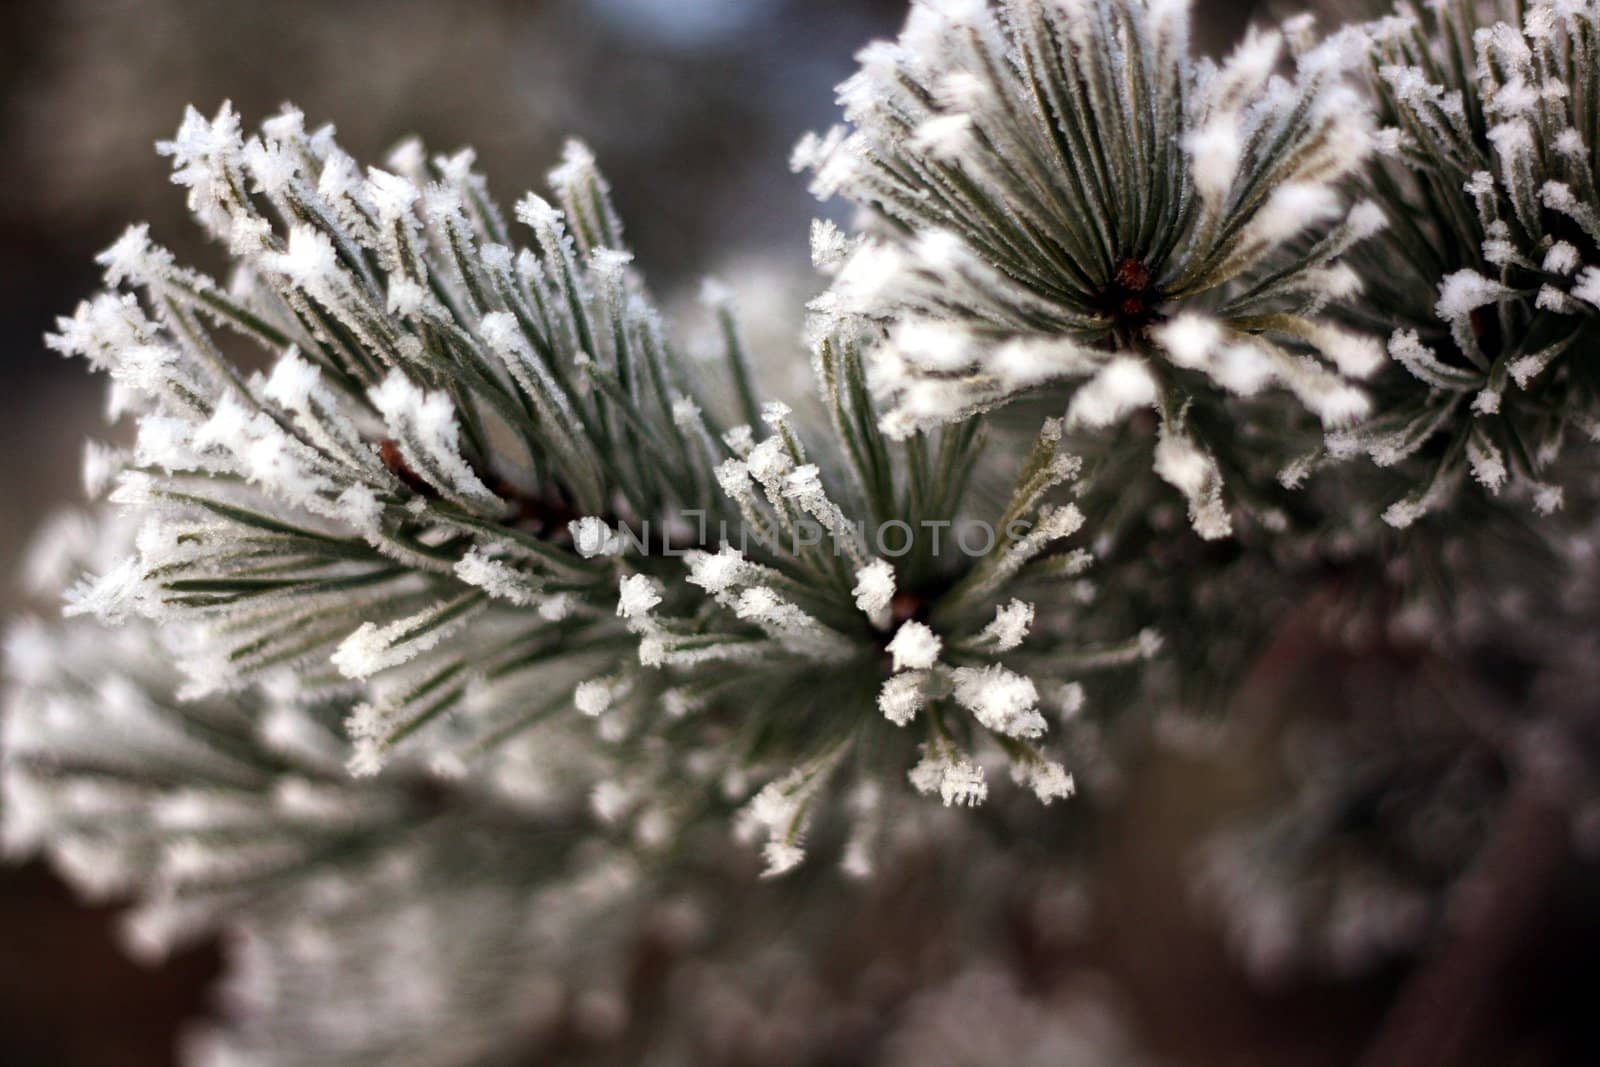 Winter pine ice crystals by sundaune